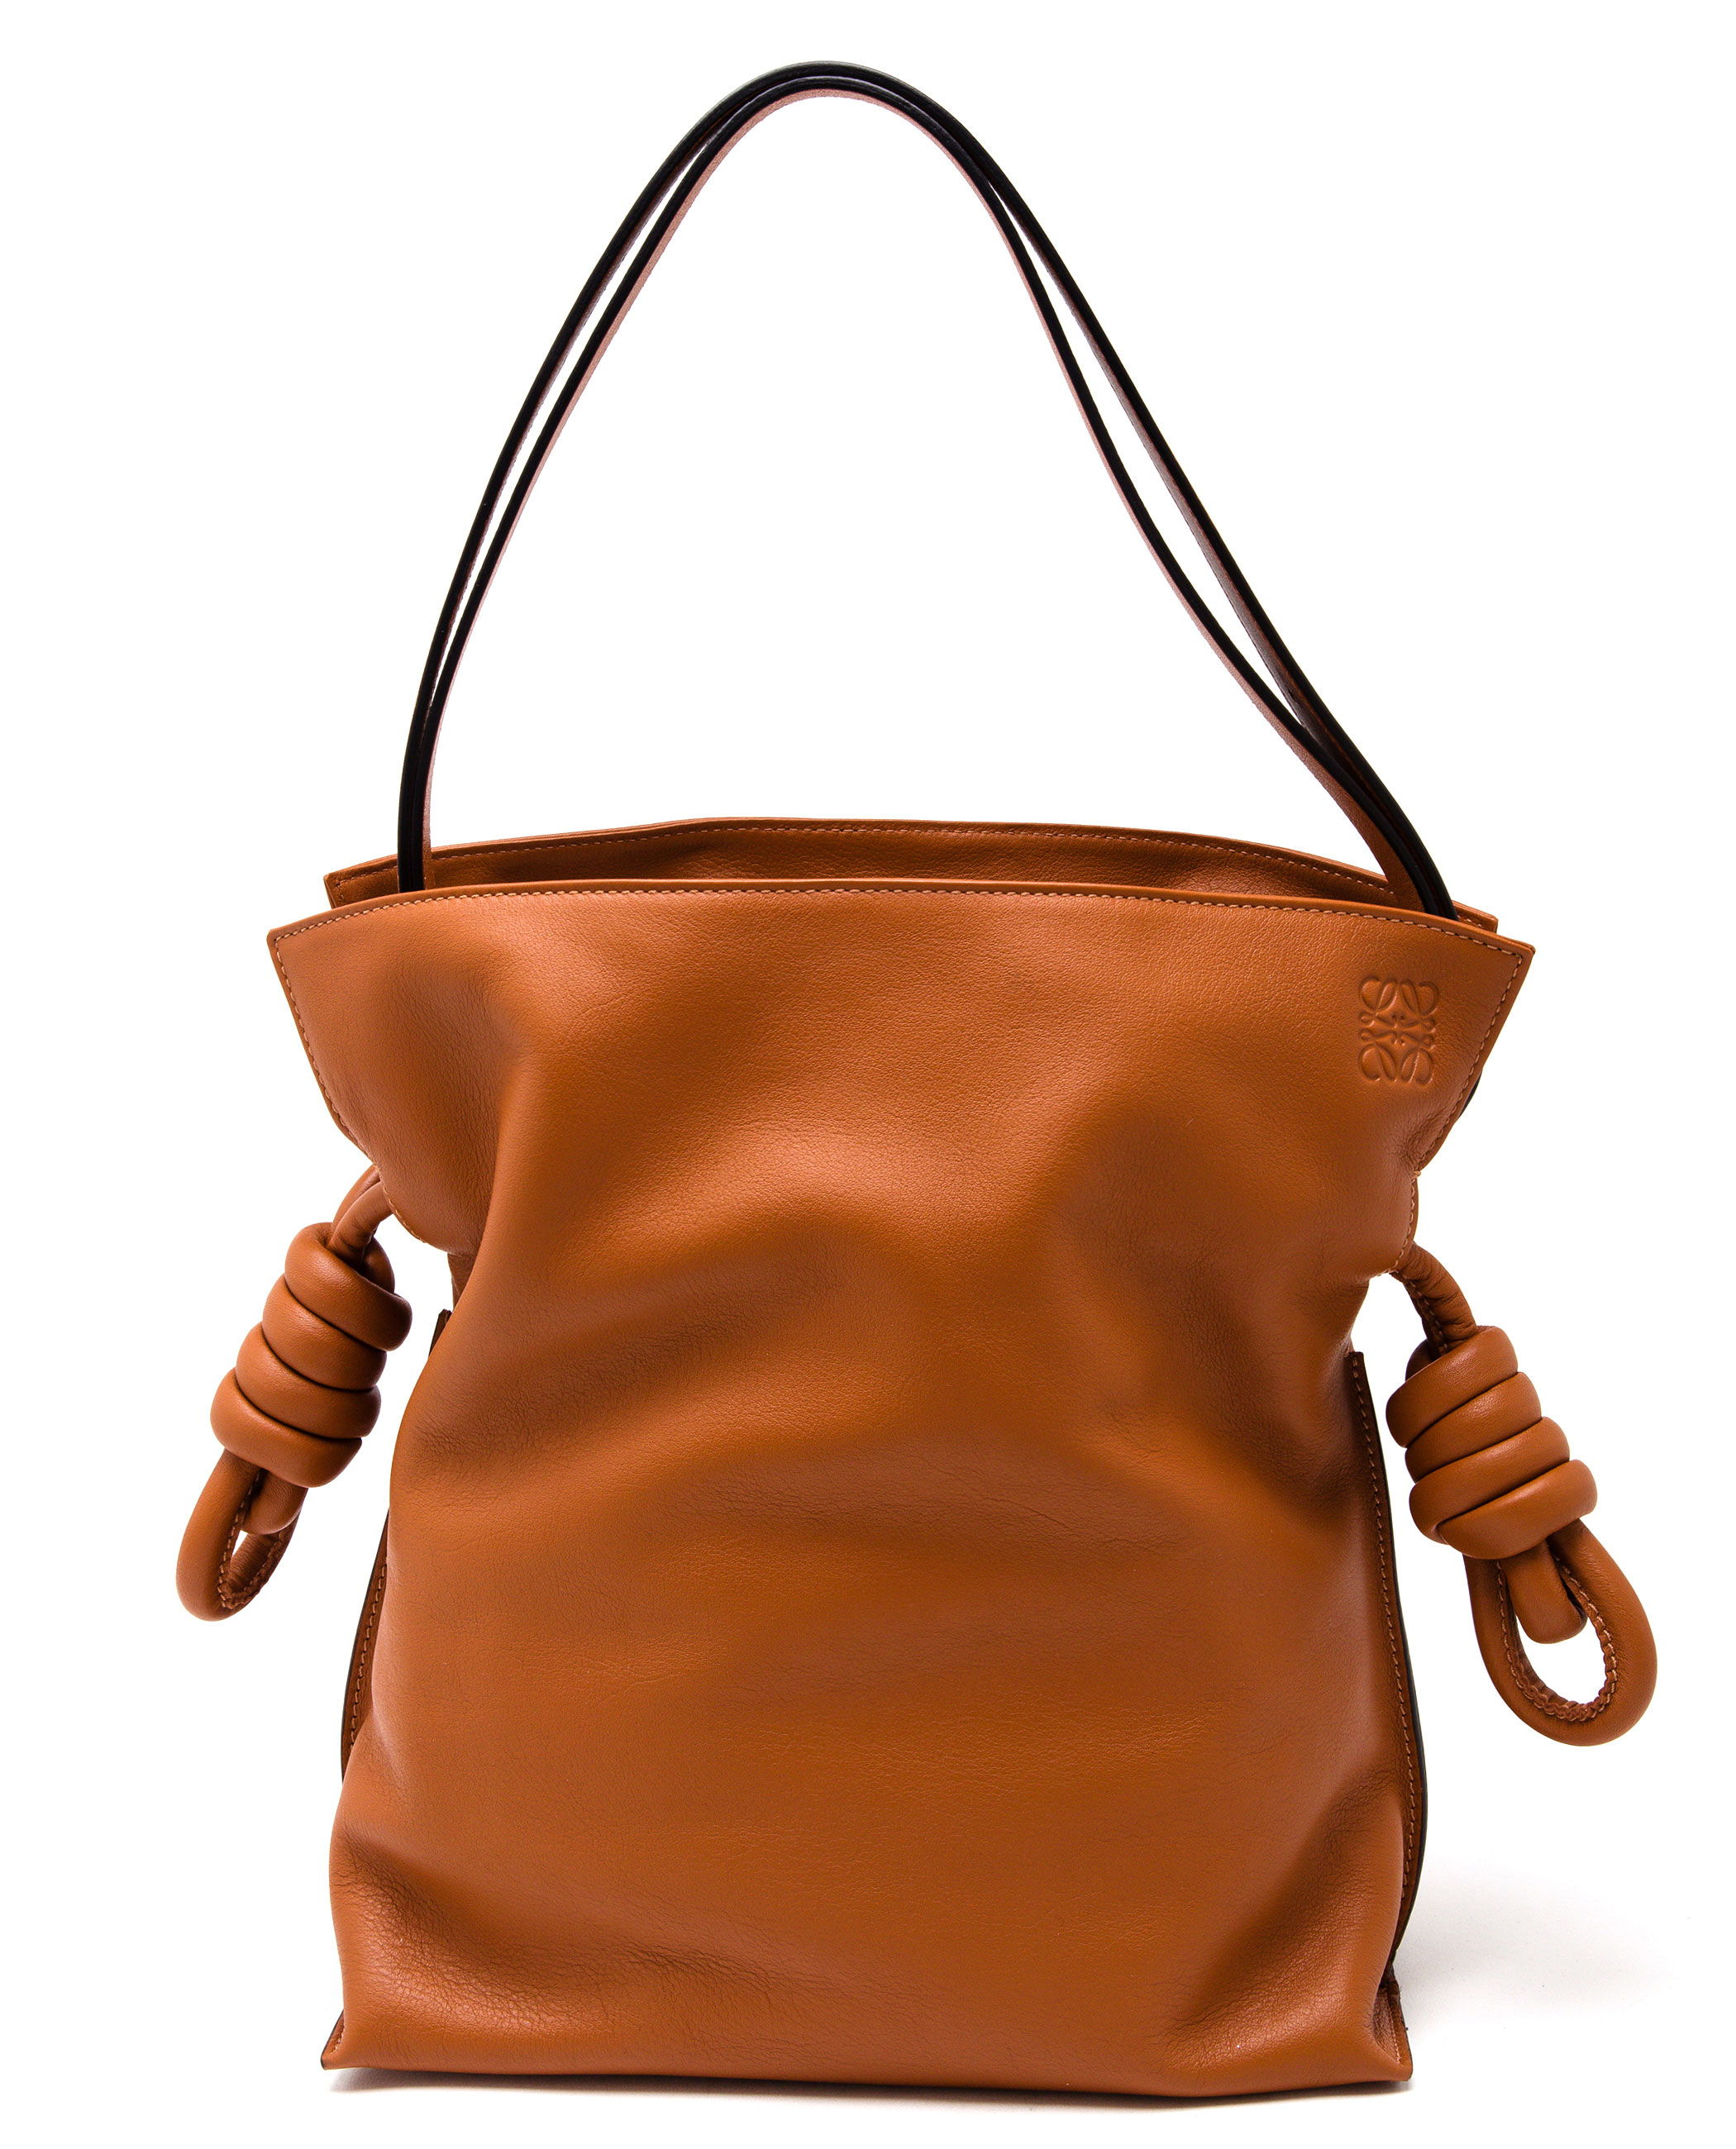 Loewe Small Flamenco Knot Leather Shoulder Bag in Tan (Brown) - Lyst